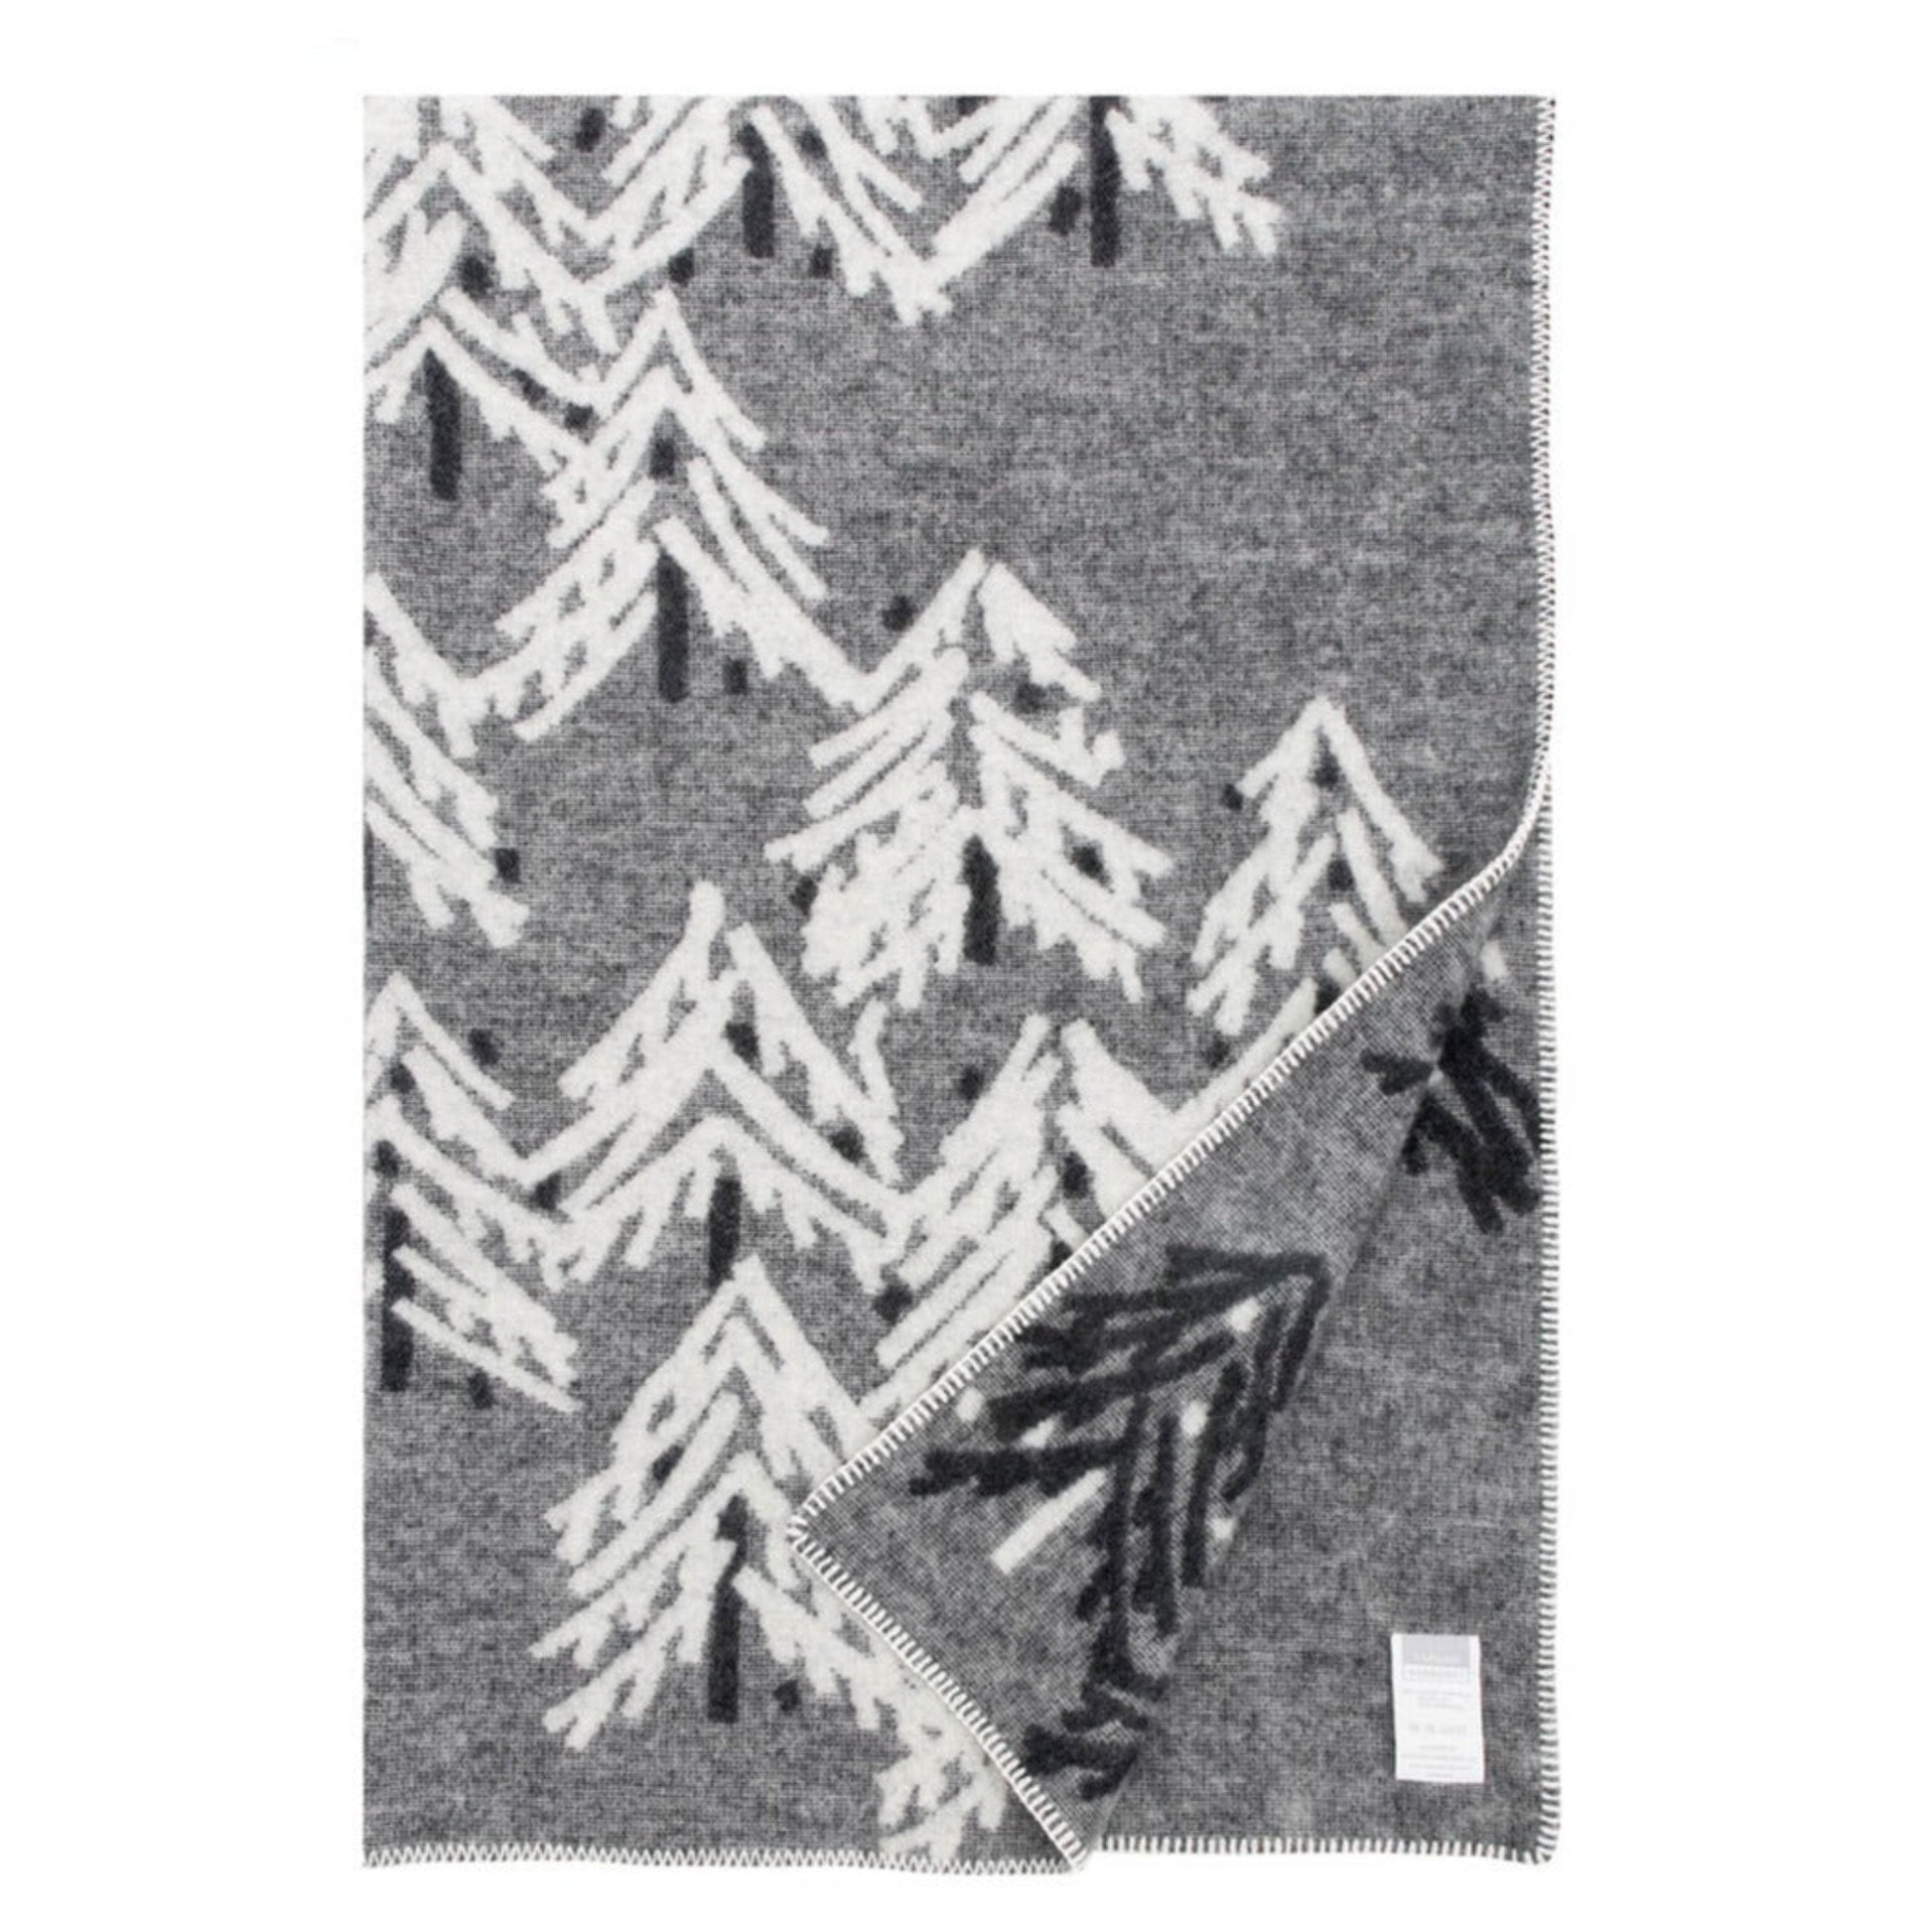 Spruce Kuusi Wool Blanket 130x200cm, Grey-White (4429661831233)